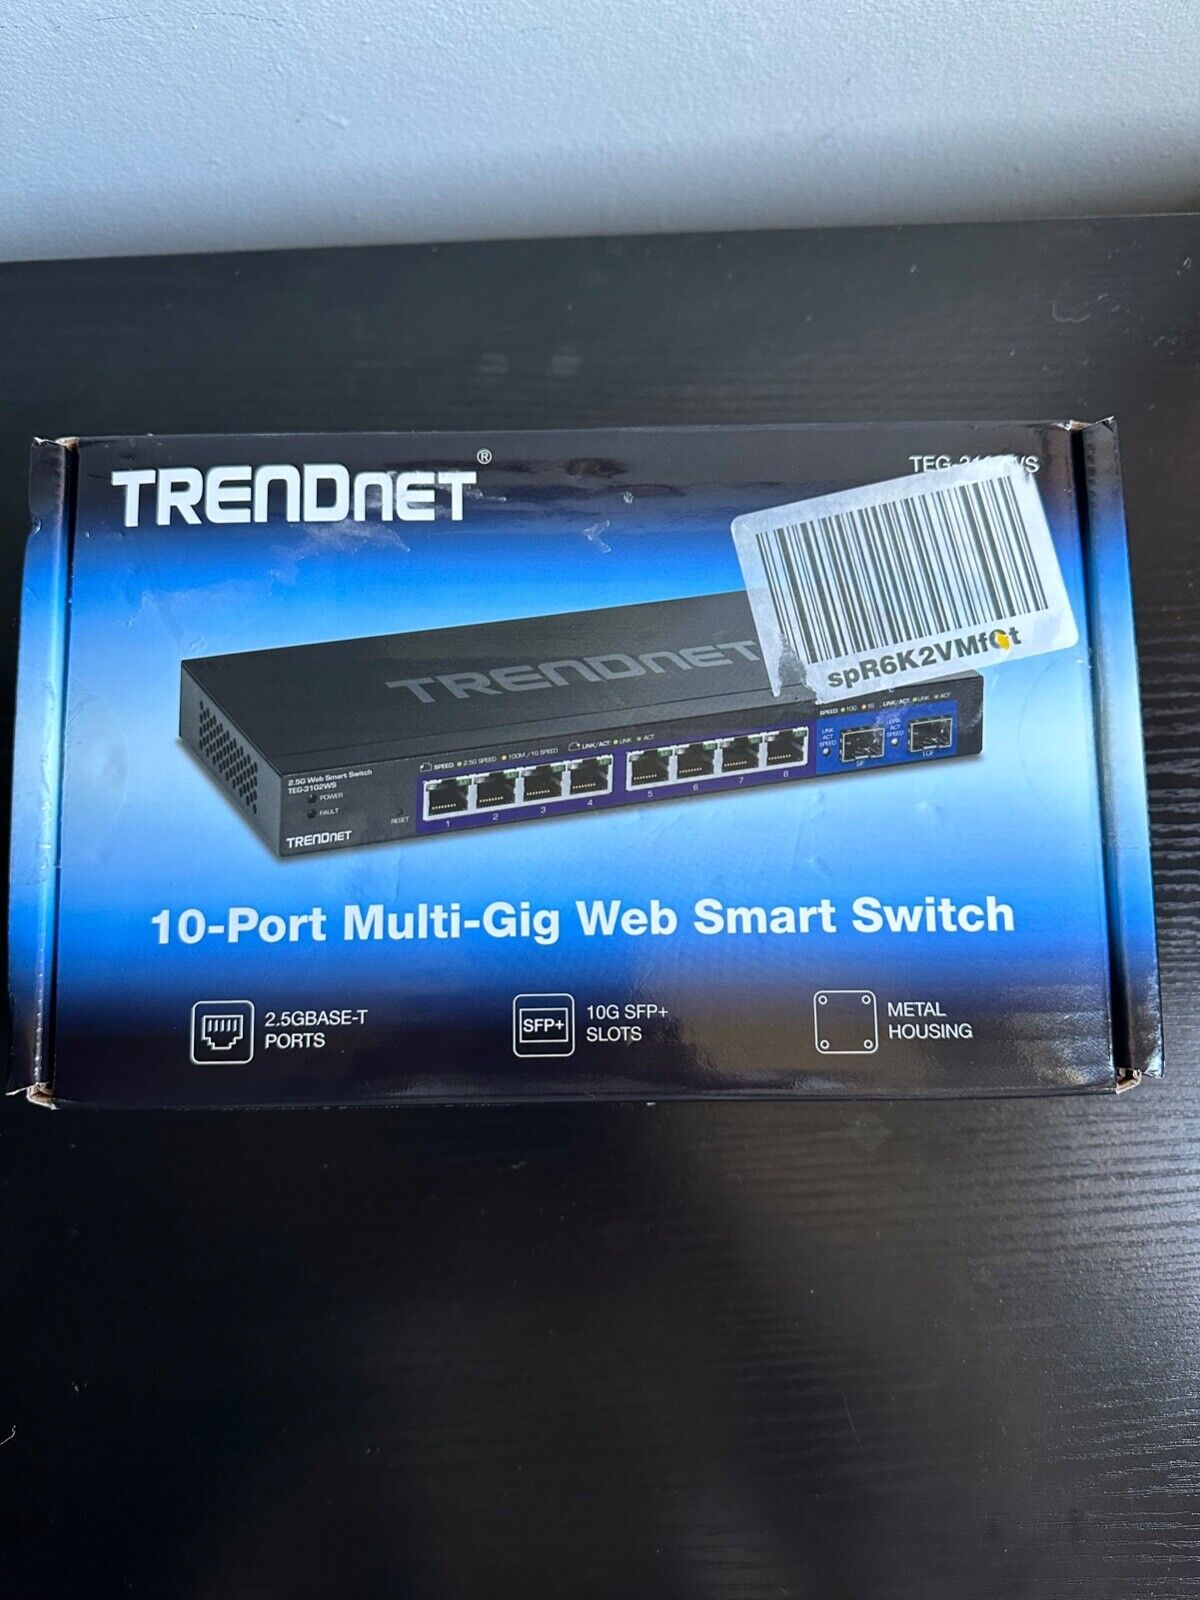 TRENDnet TEG-3102WS, 10-Port Multi-Gig Web Smart Switch